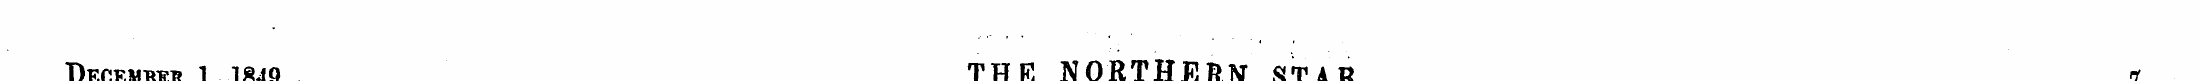 December 1,1849. THE NORTHE RN STAR, 7 -...